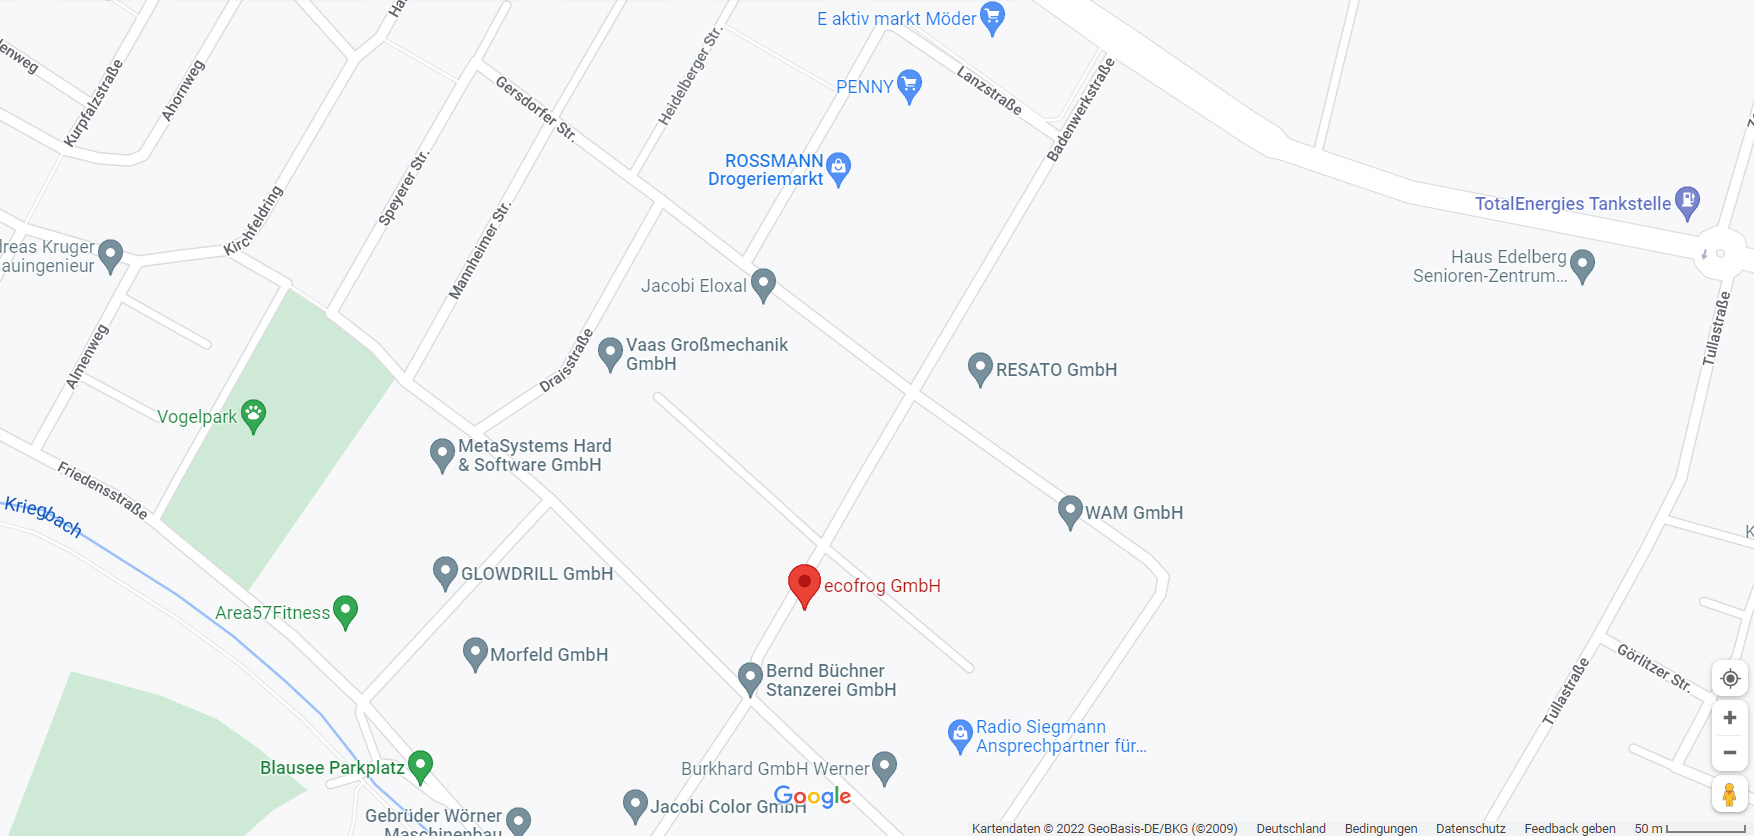 ecofrog location on google maps